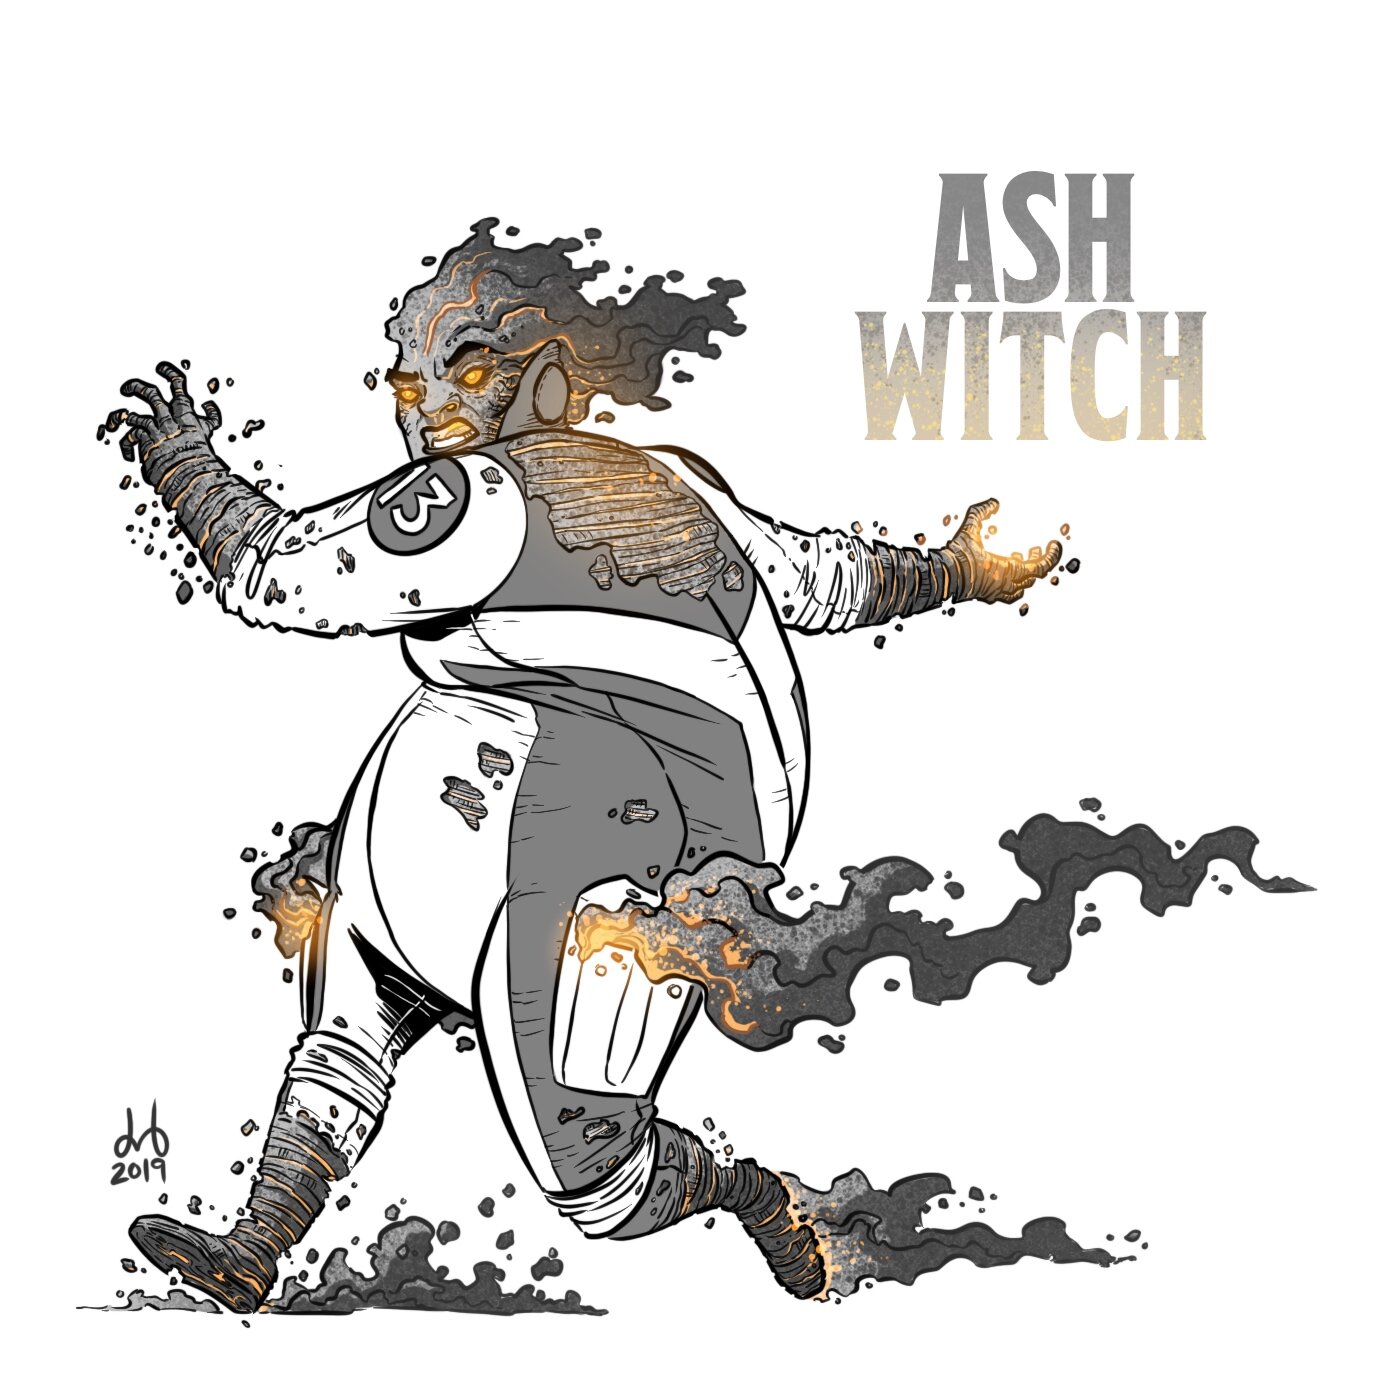 13 Ash: Ash Witch